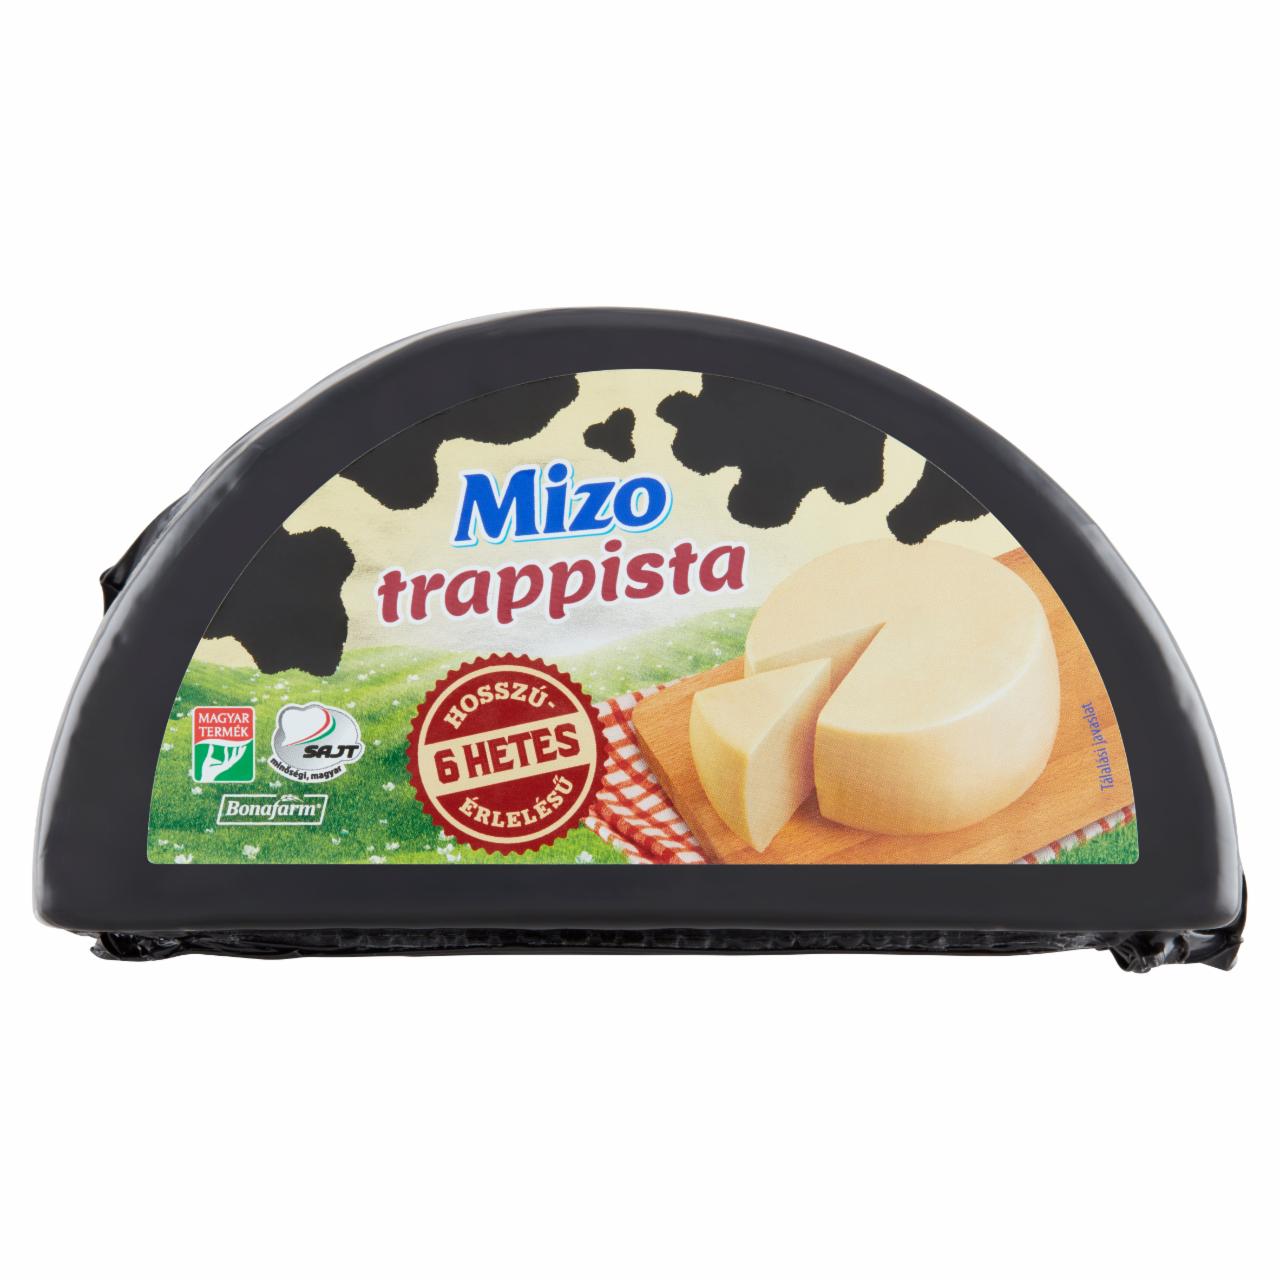 Képek - Mizo hosszú érlelésű trappista sajt 700 g